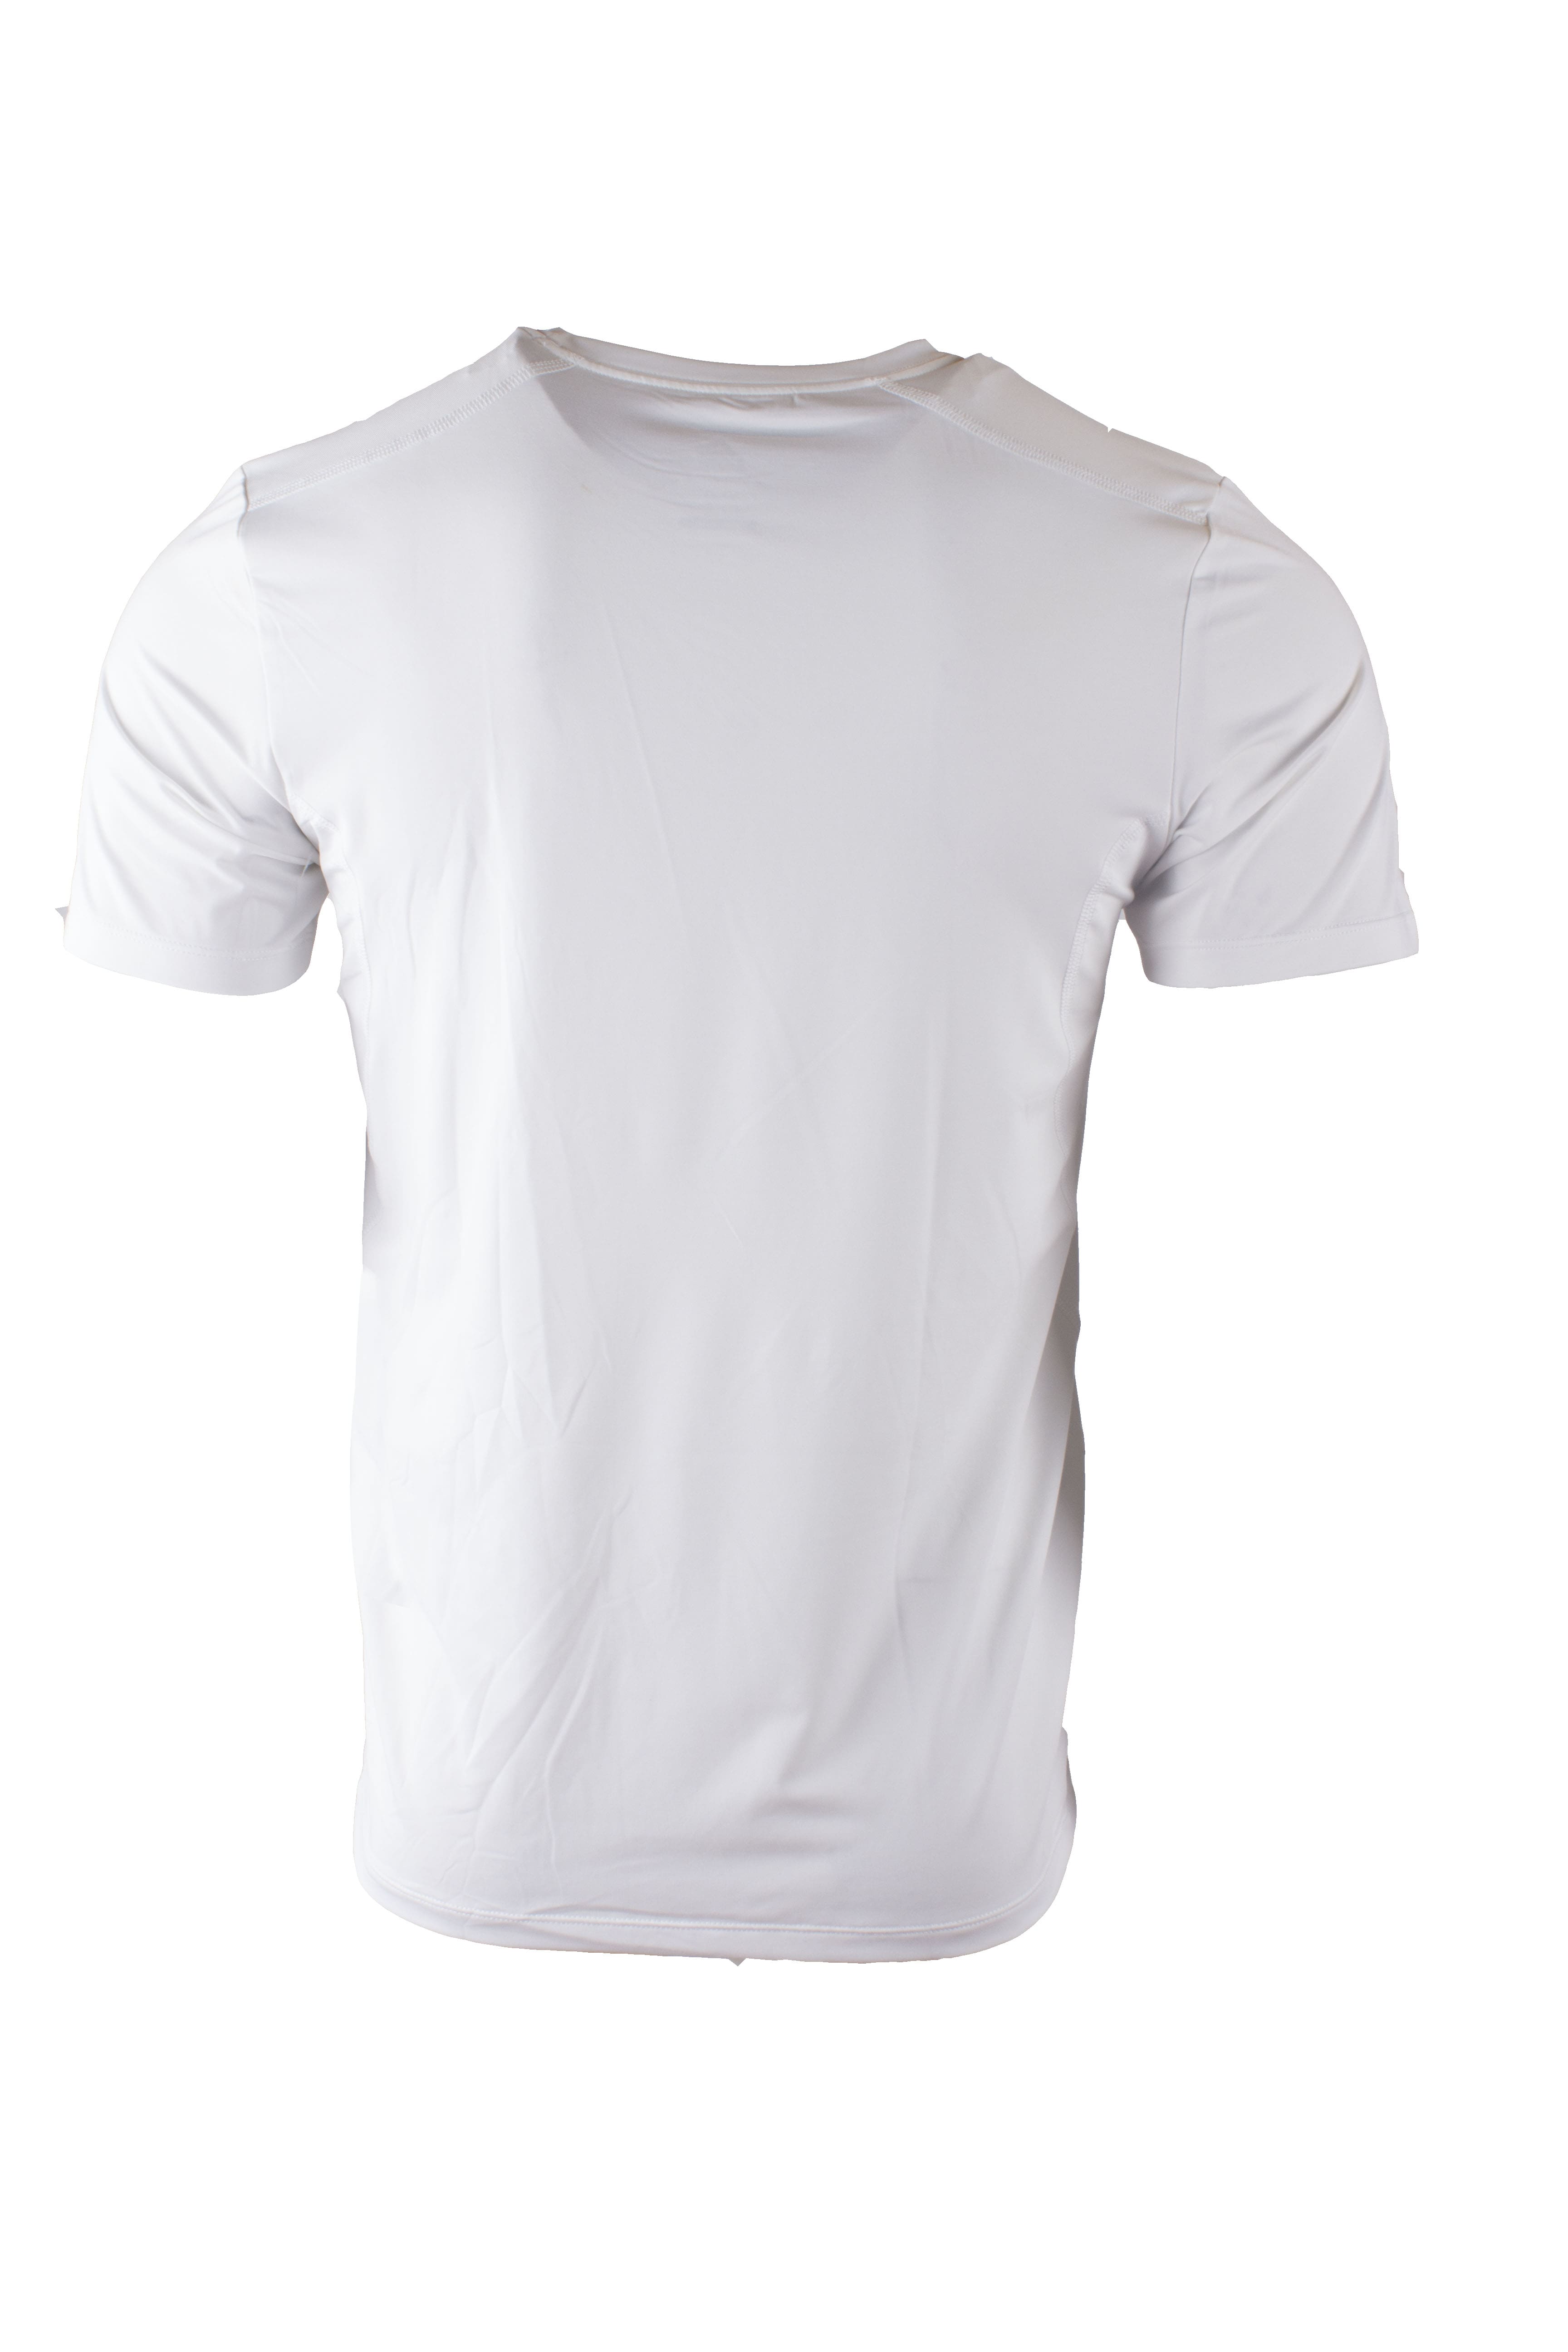 Спортивная футболка PEAK (FW63241, White)